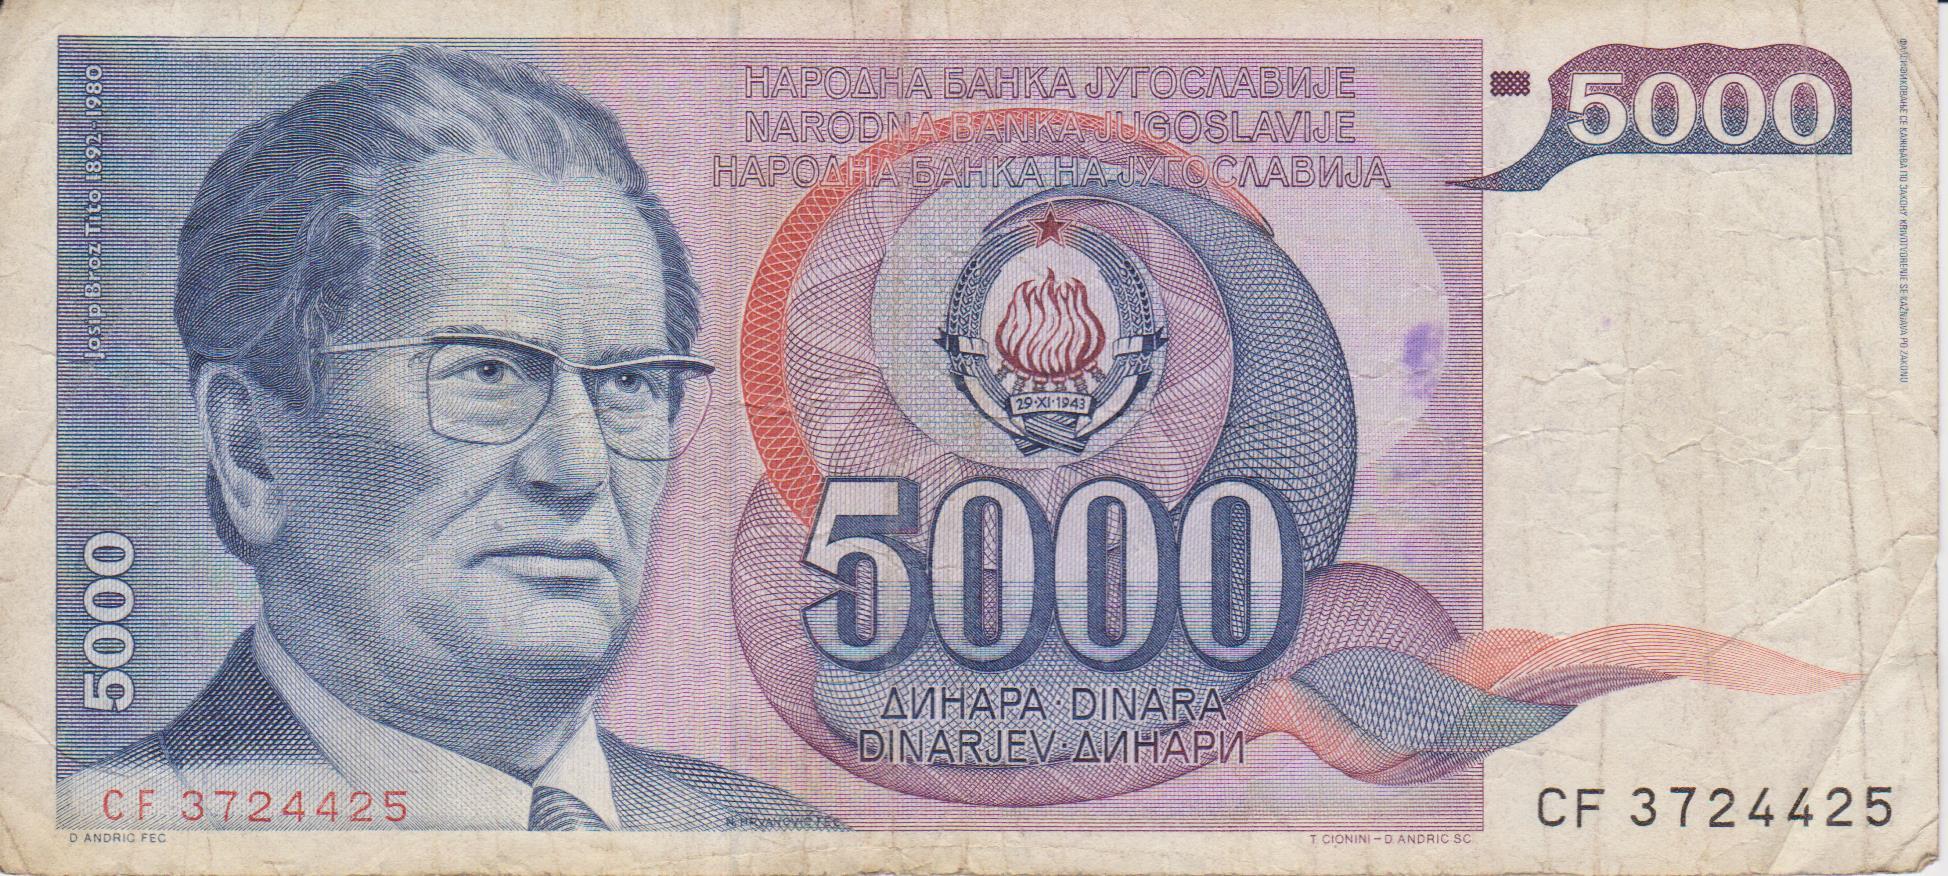 Yugoslav dinar Wallpaper and Background Image